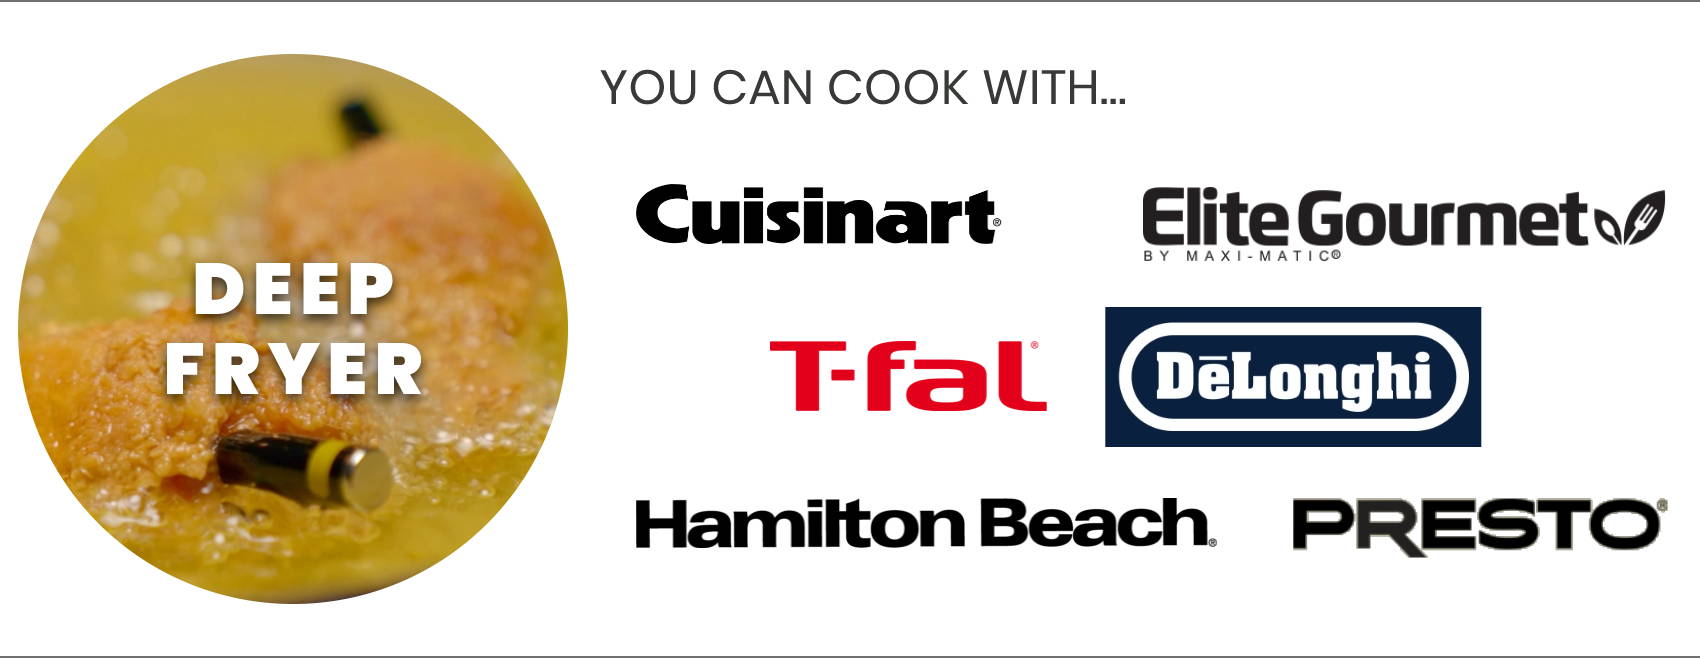 Cuisinart, Elite Gourmet, T-fal, DeLonghi, Hamilton Beach, Presto